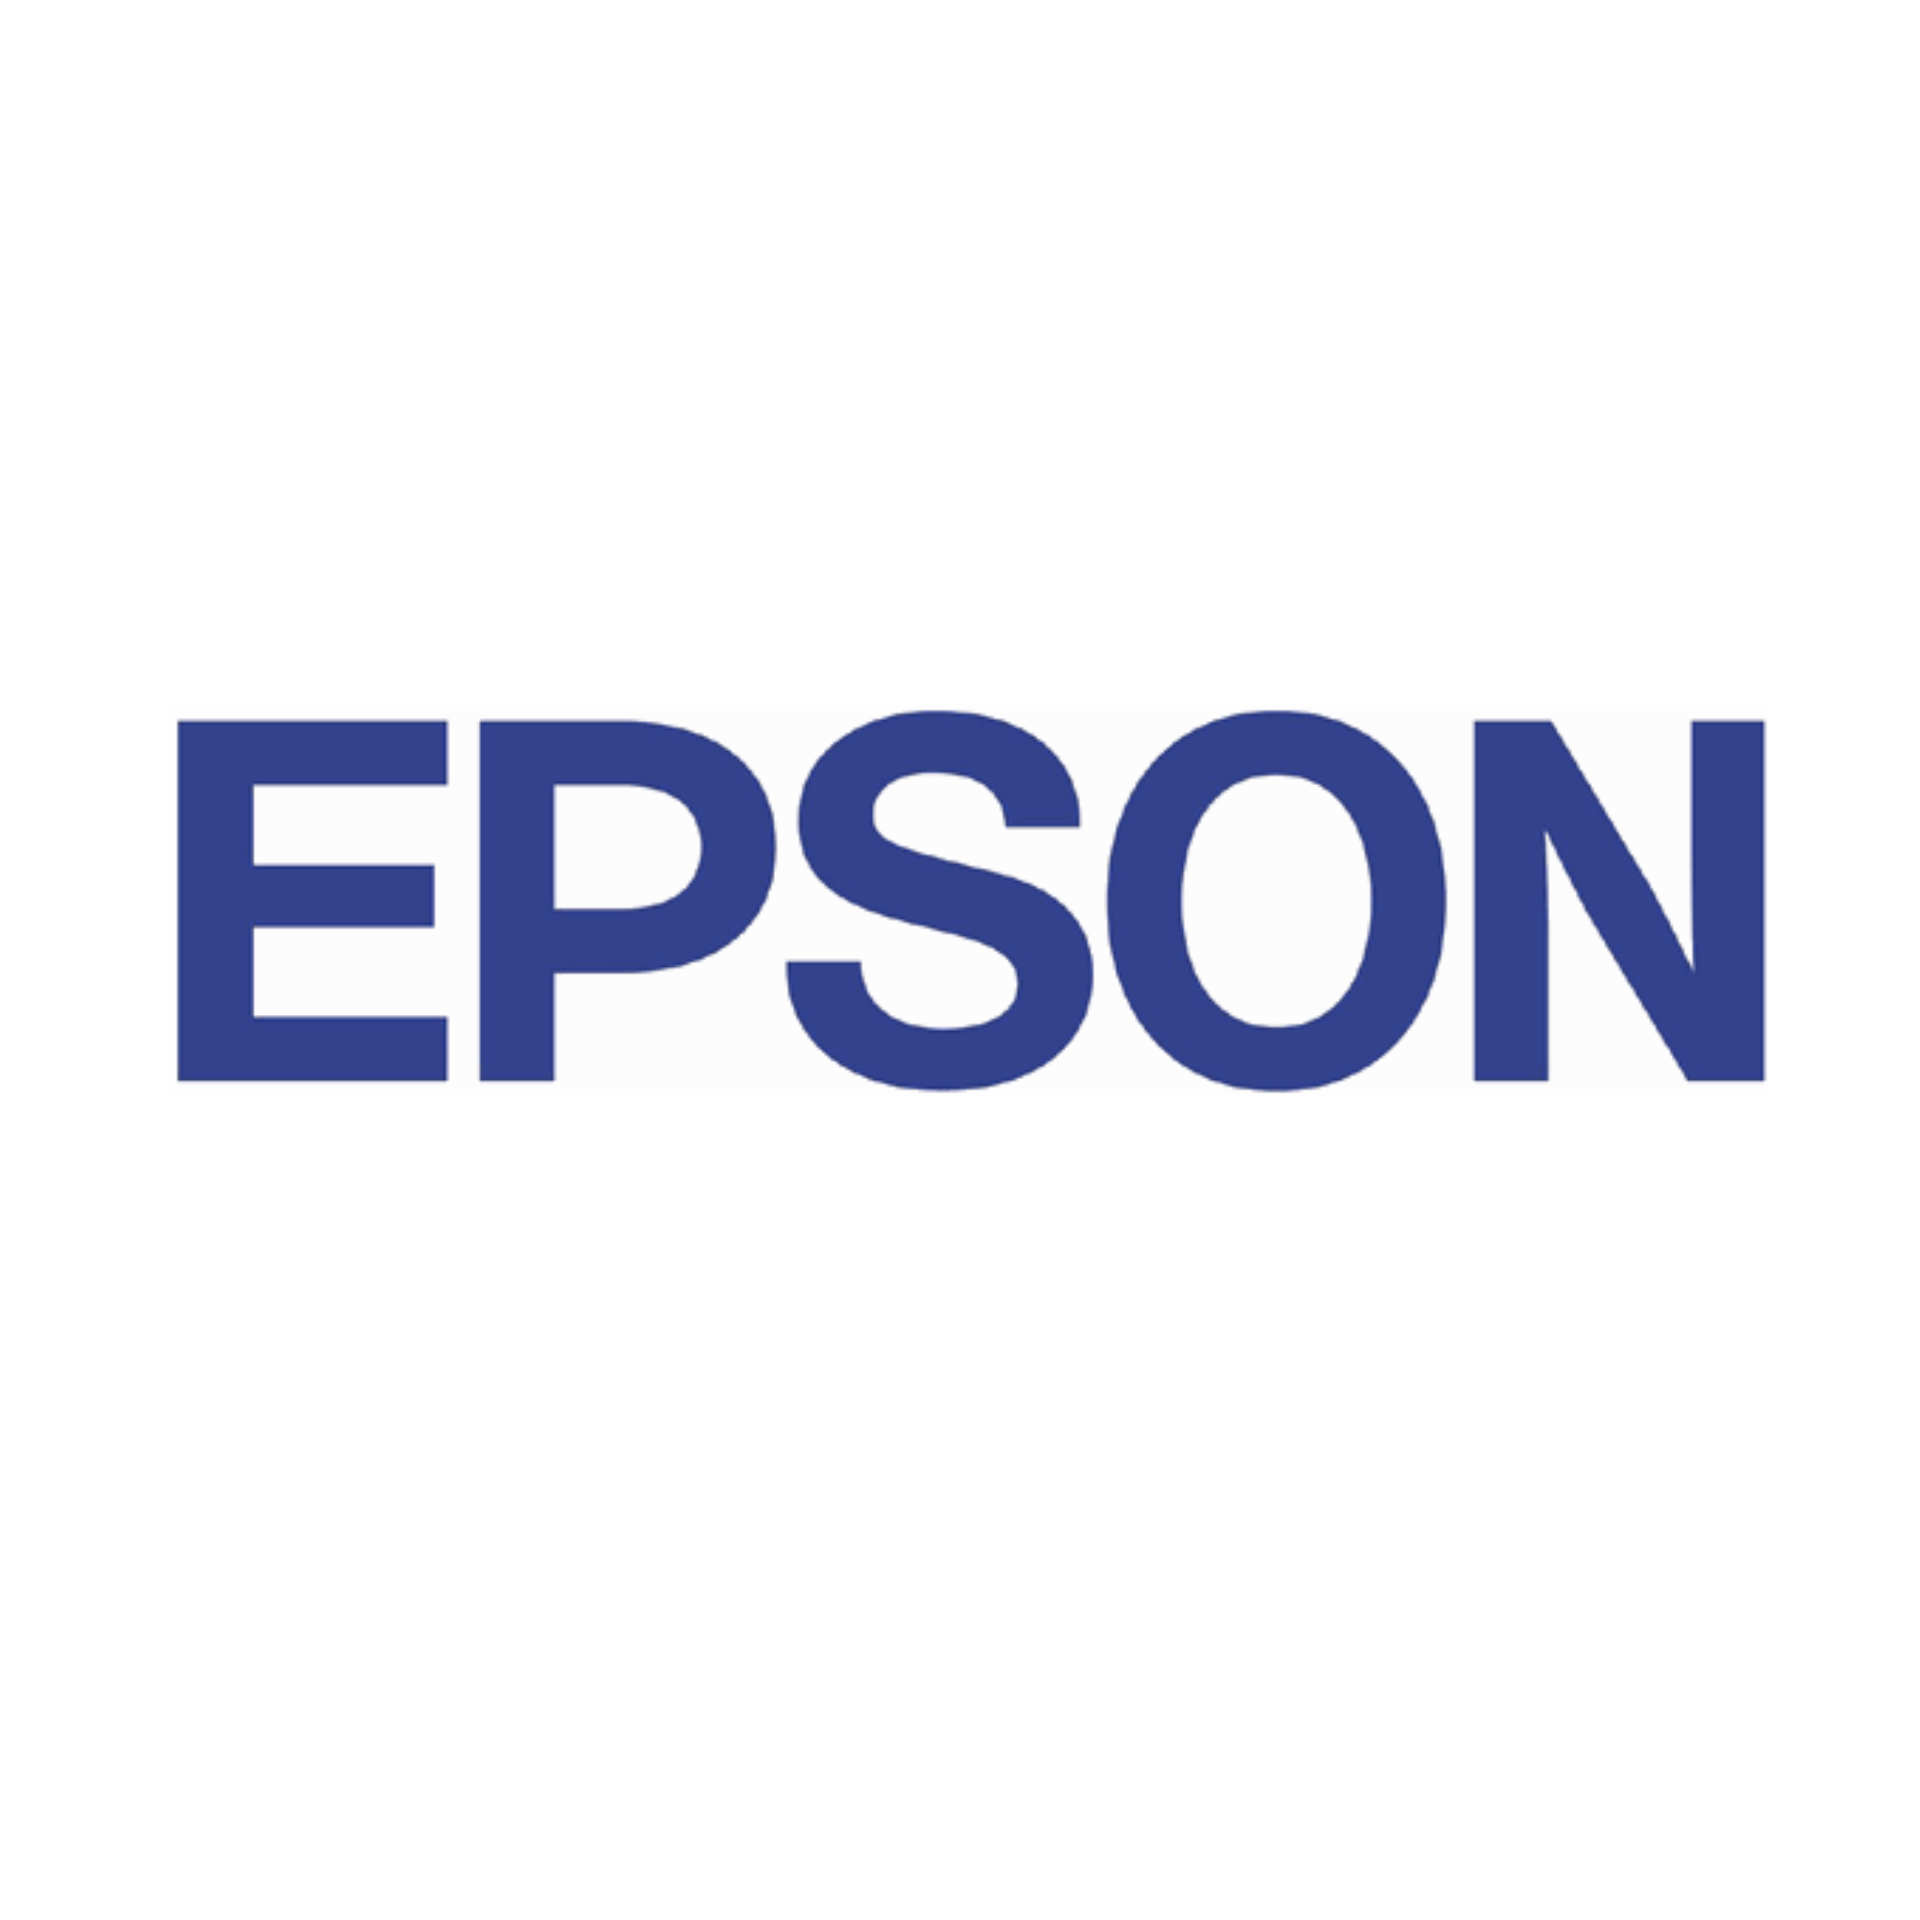 Epson Production Poly Textile B1 Light